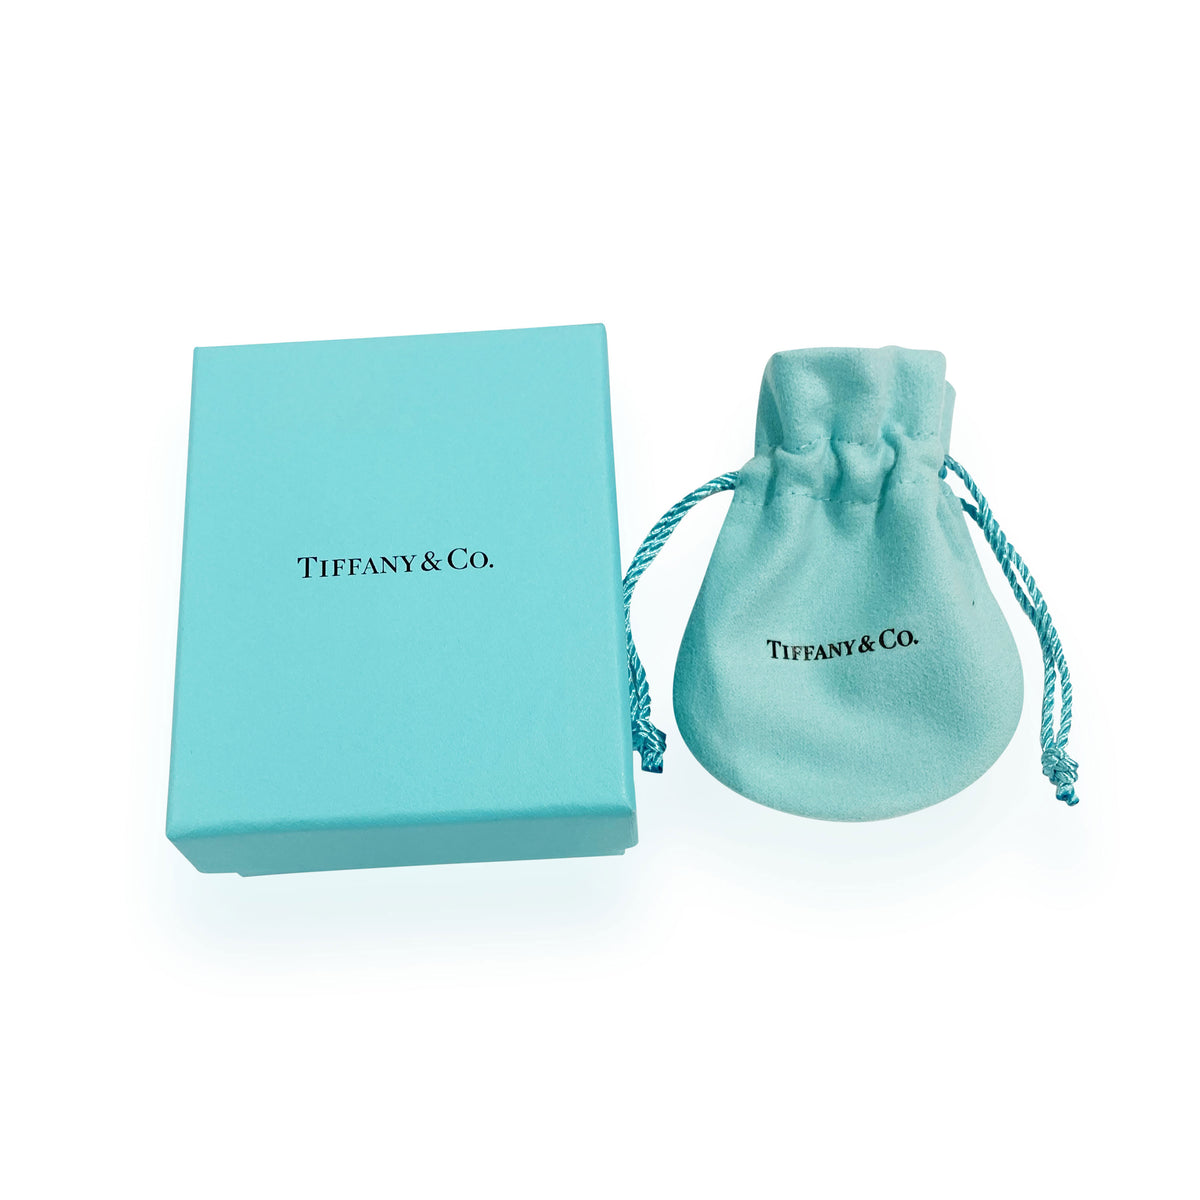 Tiffany & Co. Soleste Diamond Pendant in Platinum DEF VVS 0.